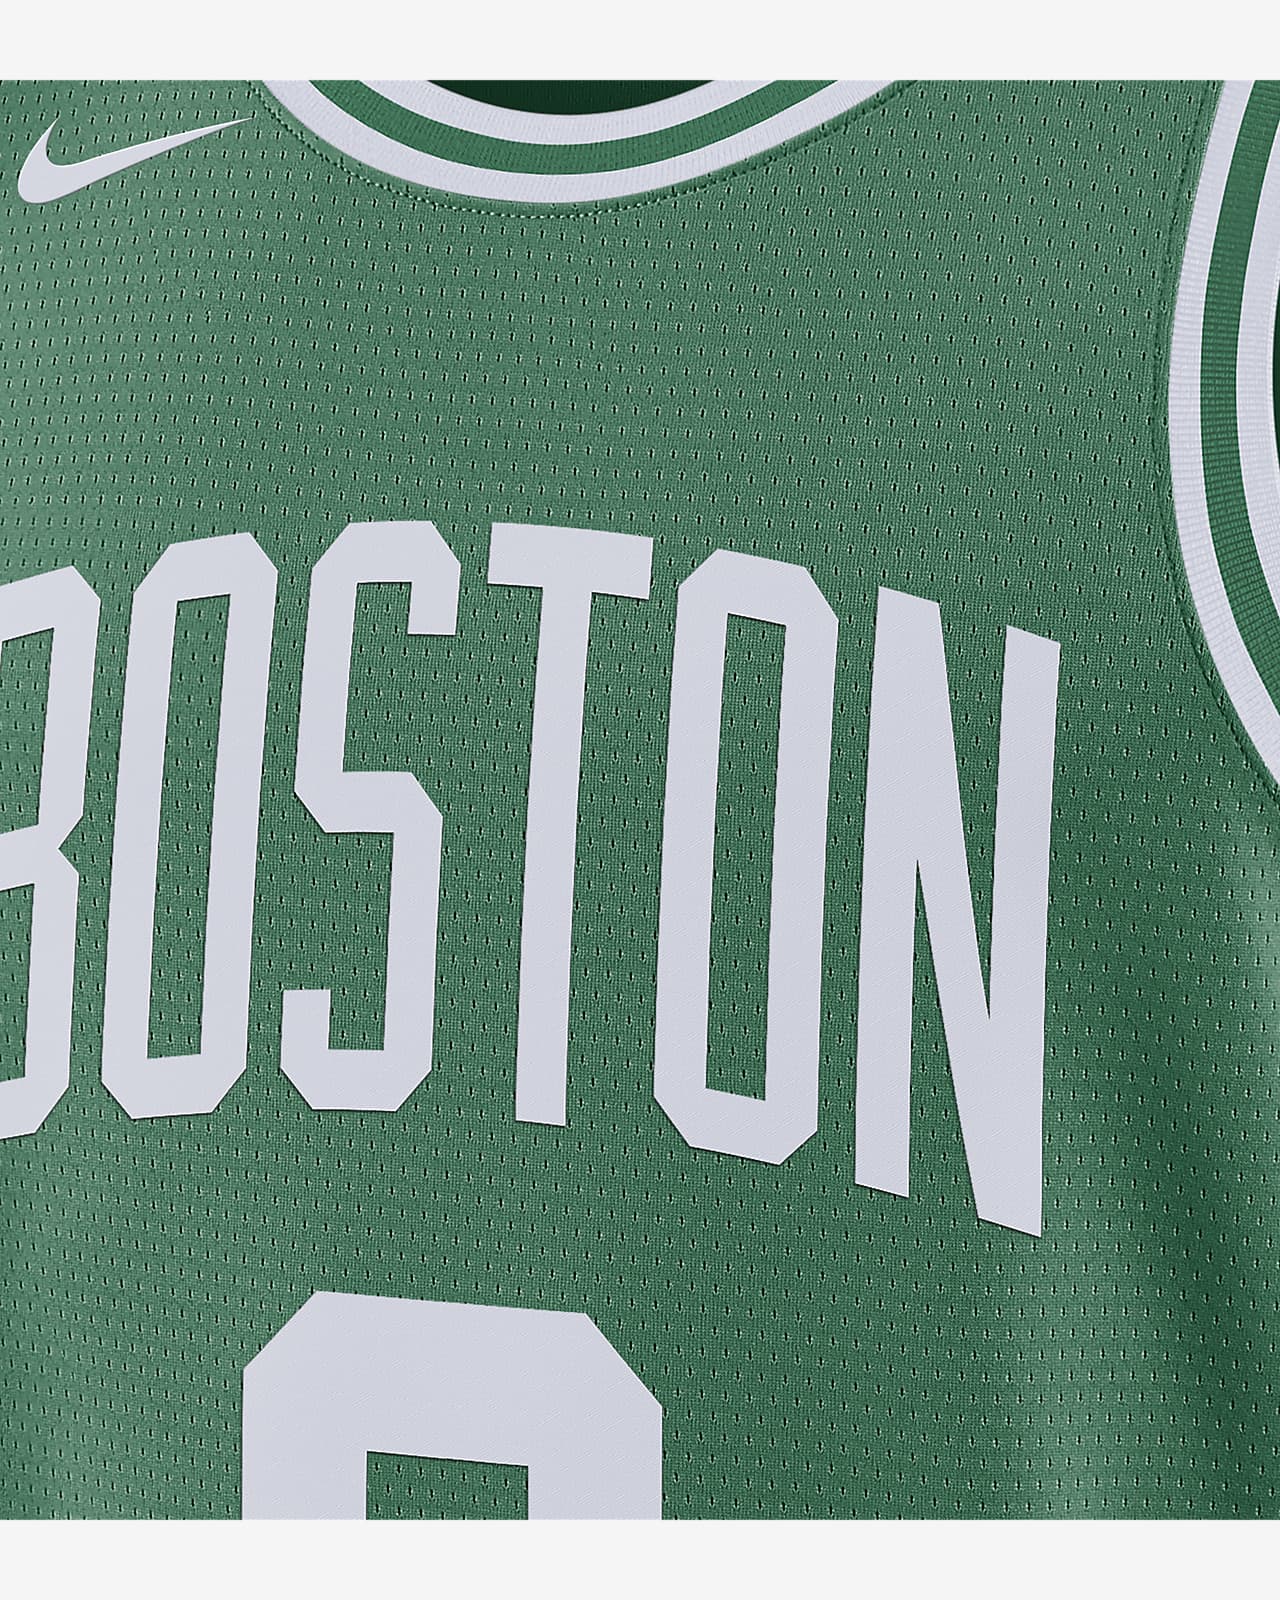 Boston Celtics UK☘️ (The Boston Brit) on X: The Boston Brit @celtics  @nikebasketball & @Jumpman23 concept jerseys 20-21 ☘️ — Which ones you  wearing? 💪🏻☘️ — #TheBostonBrit #AlwaysElevate #